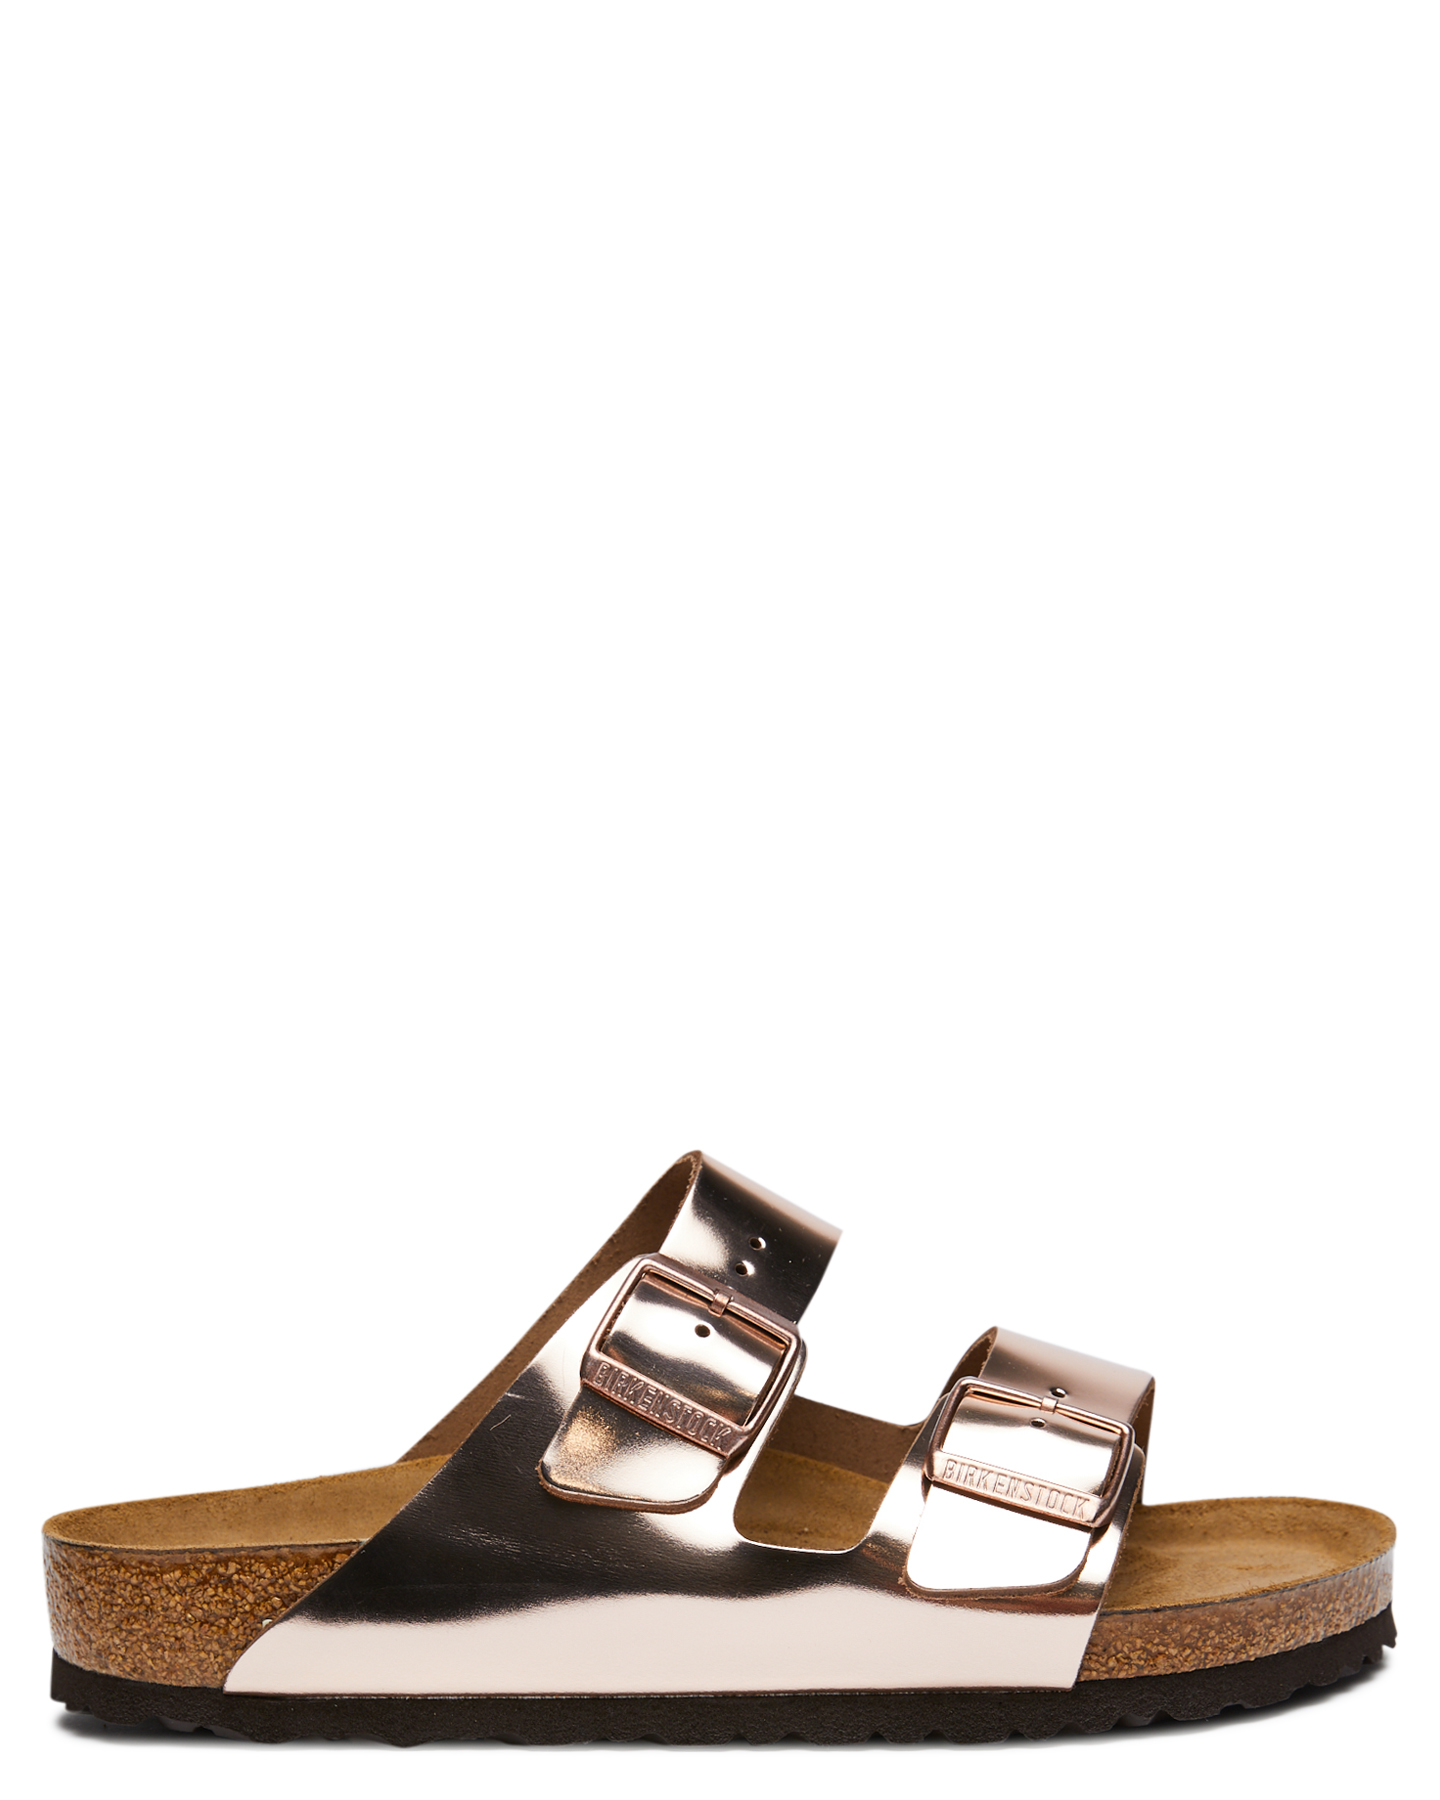 metallic sandals australia